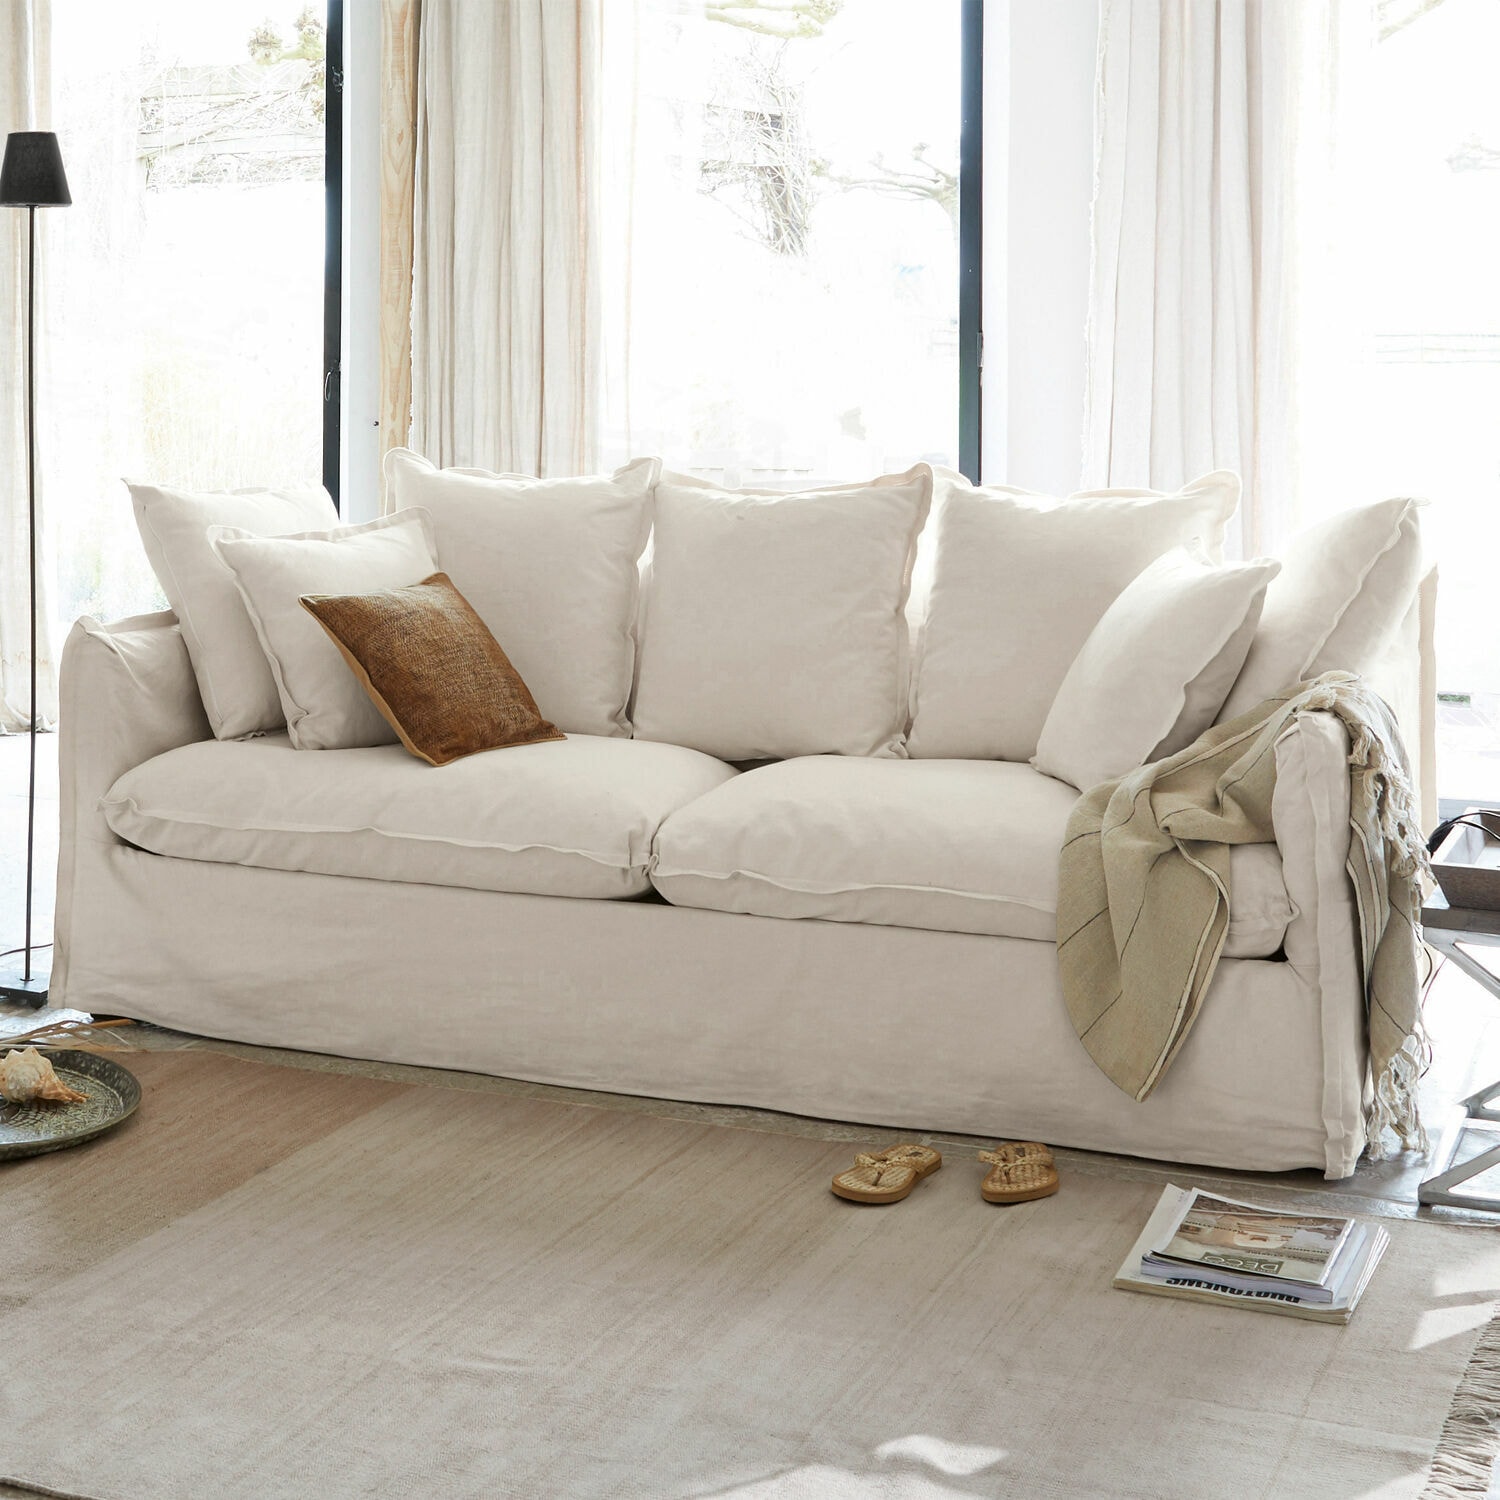 Couch potato, couch potata ????featuring our Coastal Sofa.